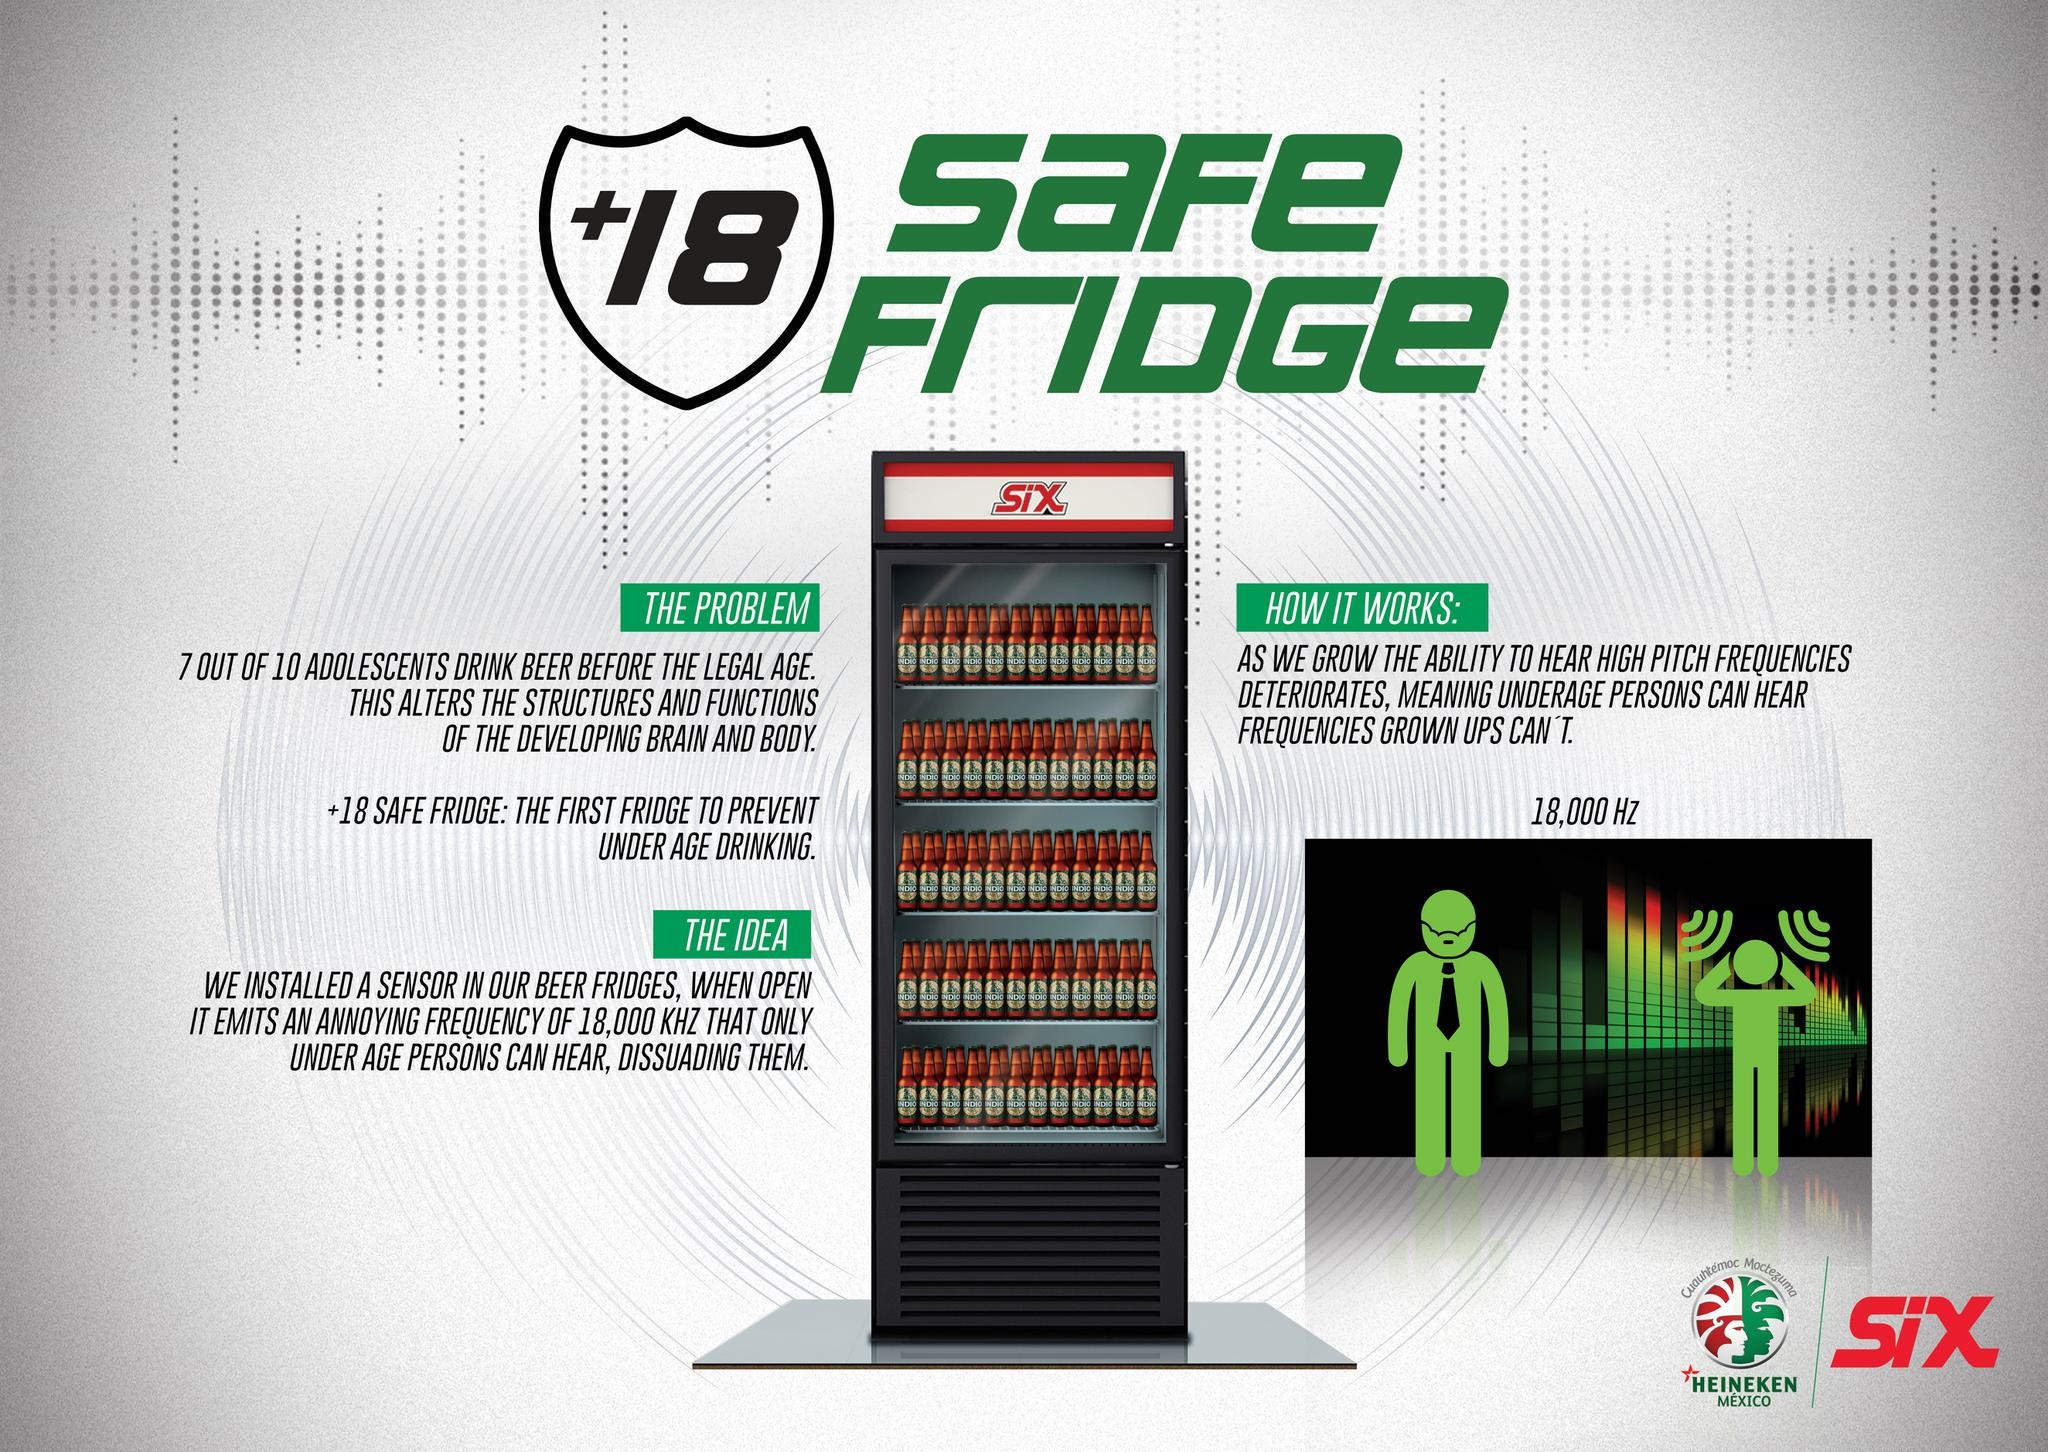 THE +18 SAFE FRIDGE